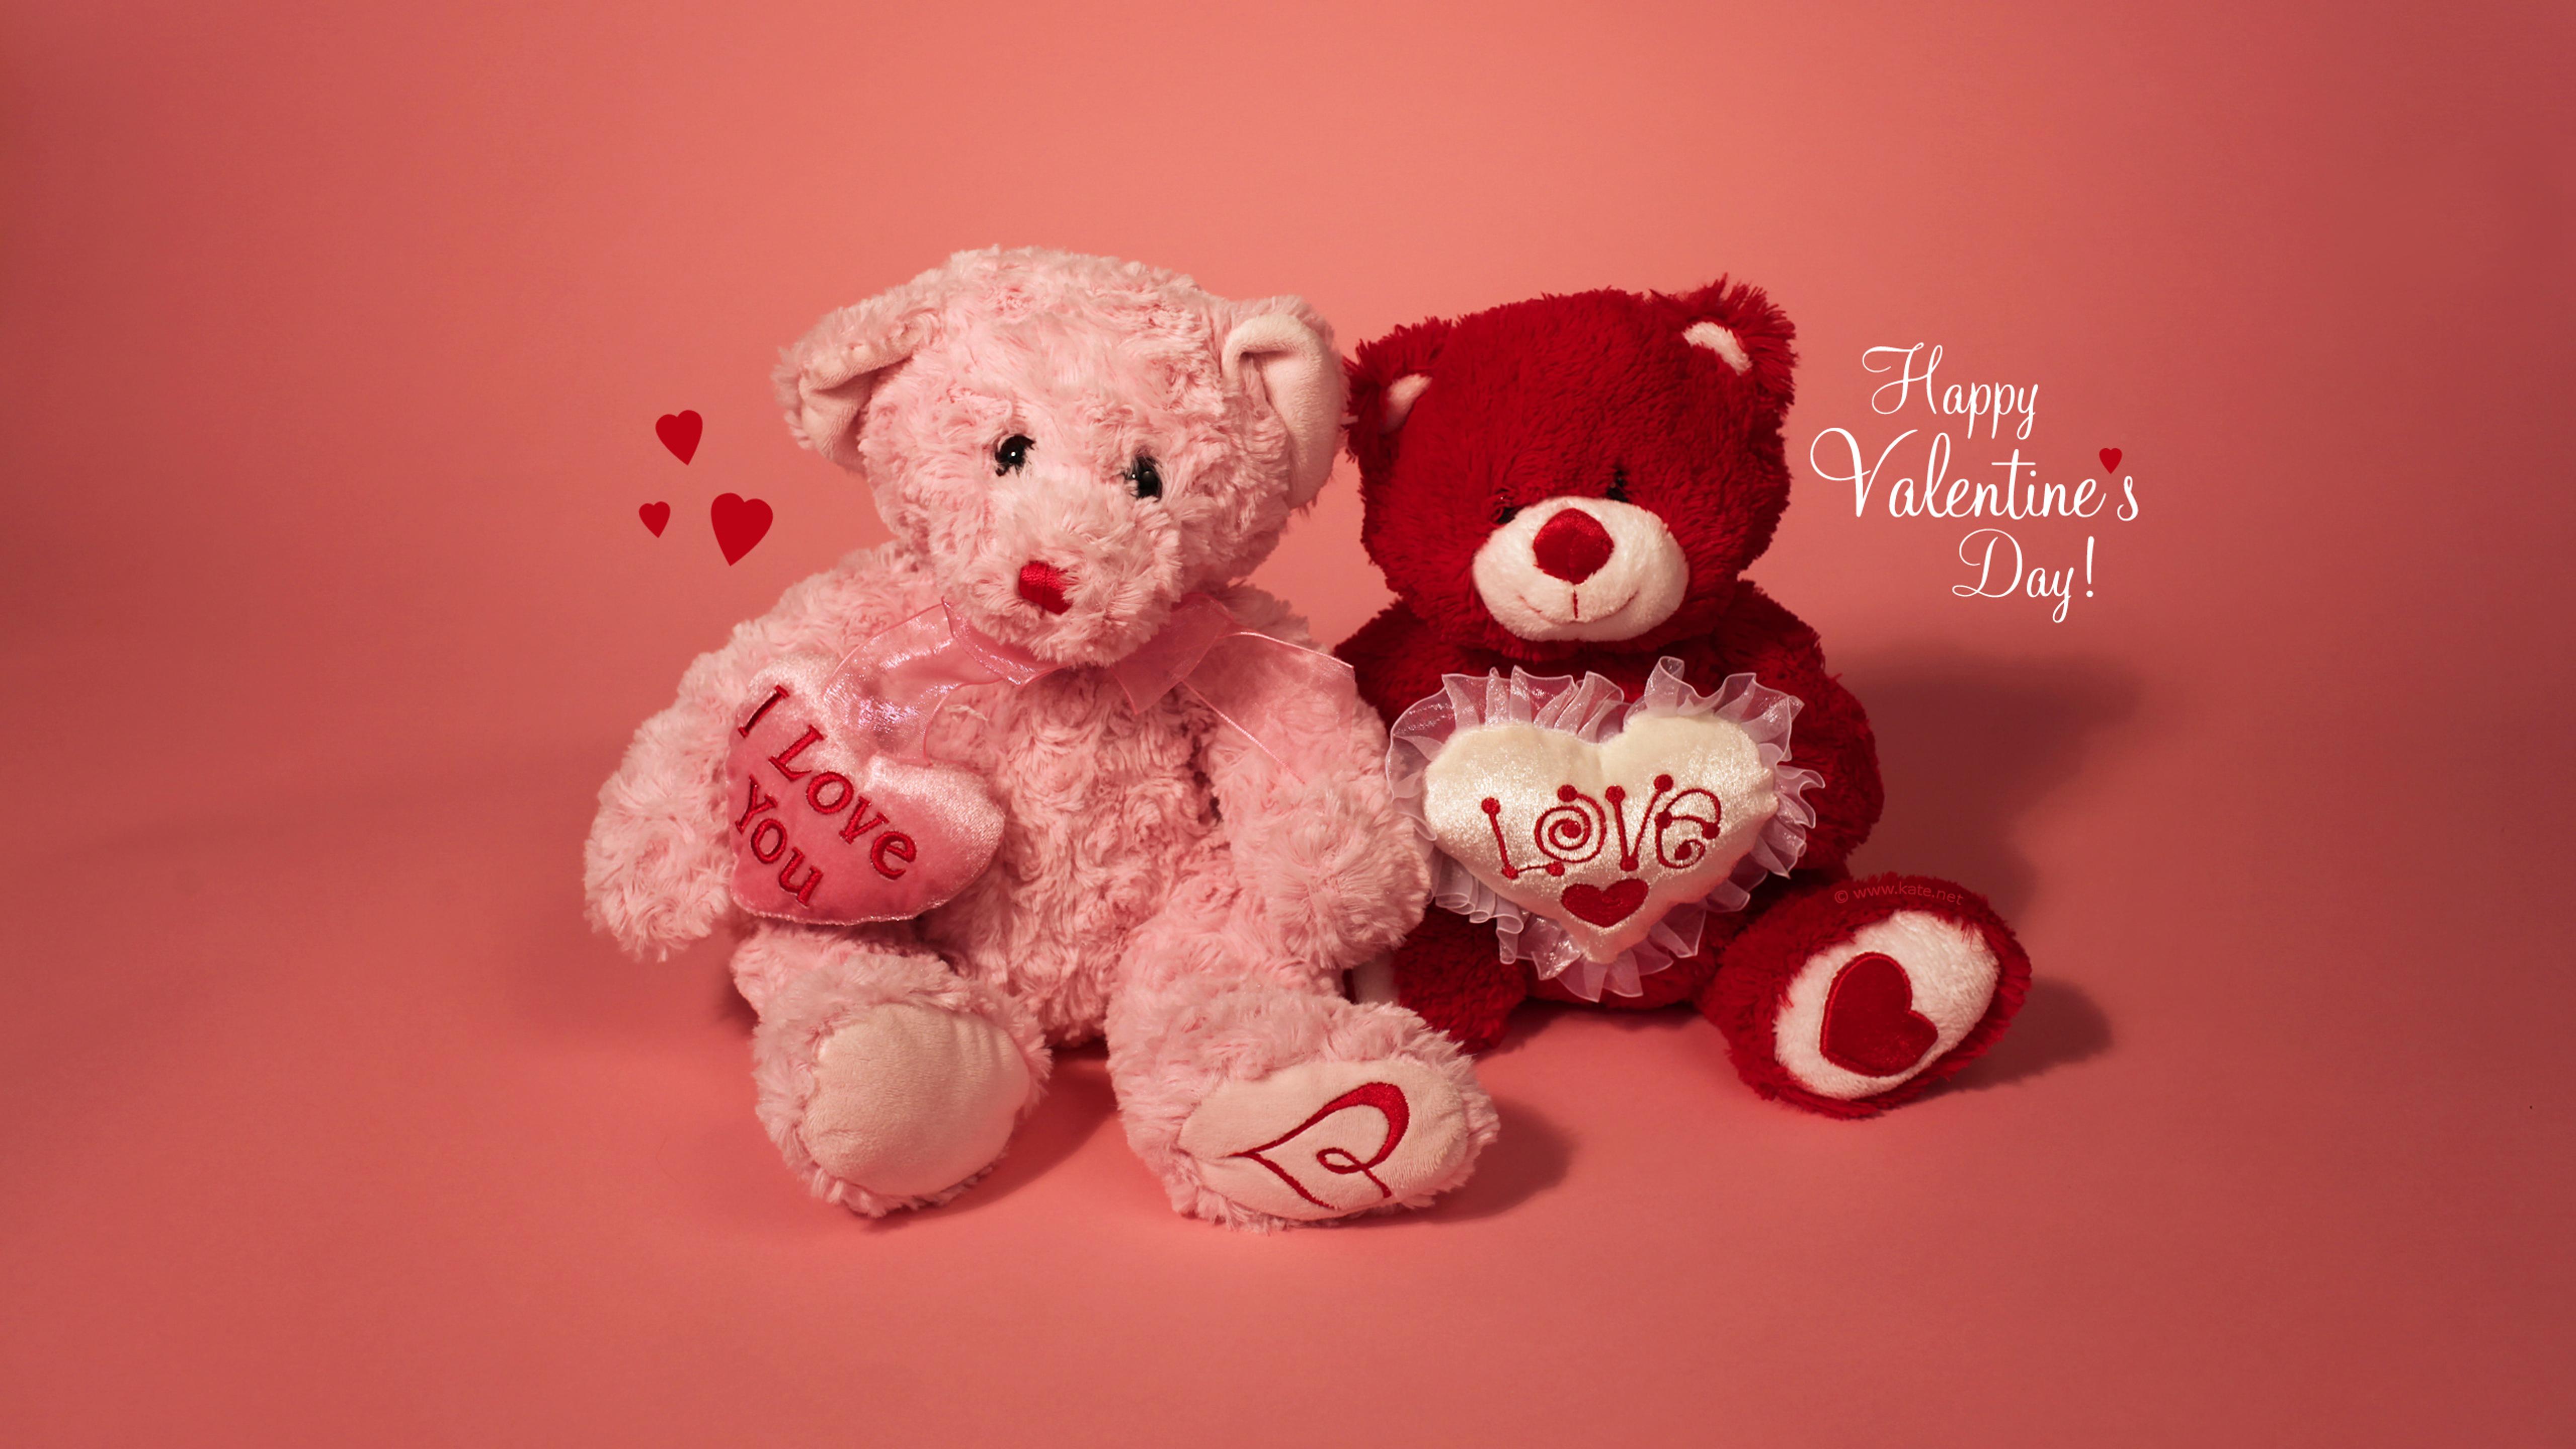 I love you my teddy bear - Happy Valentine's Day